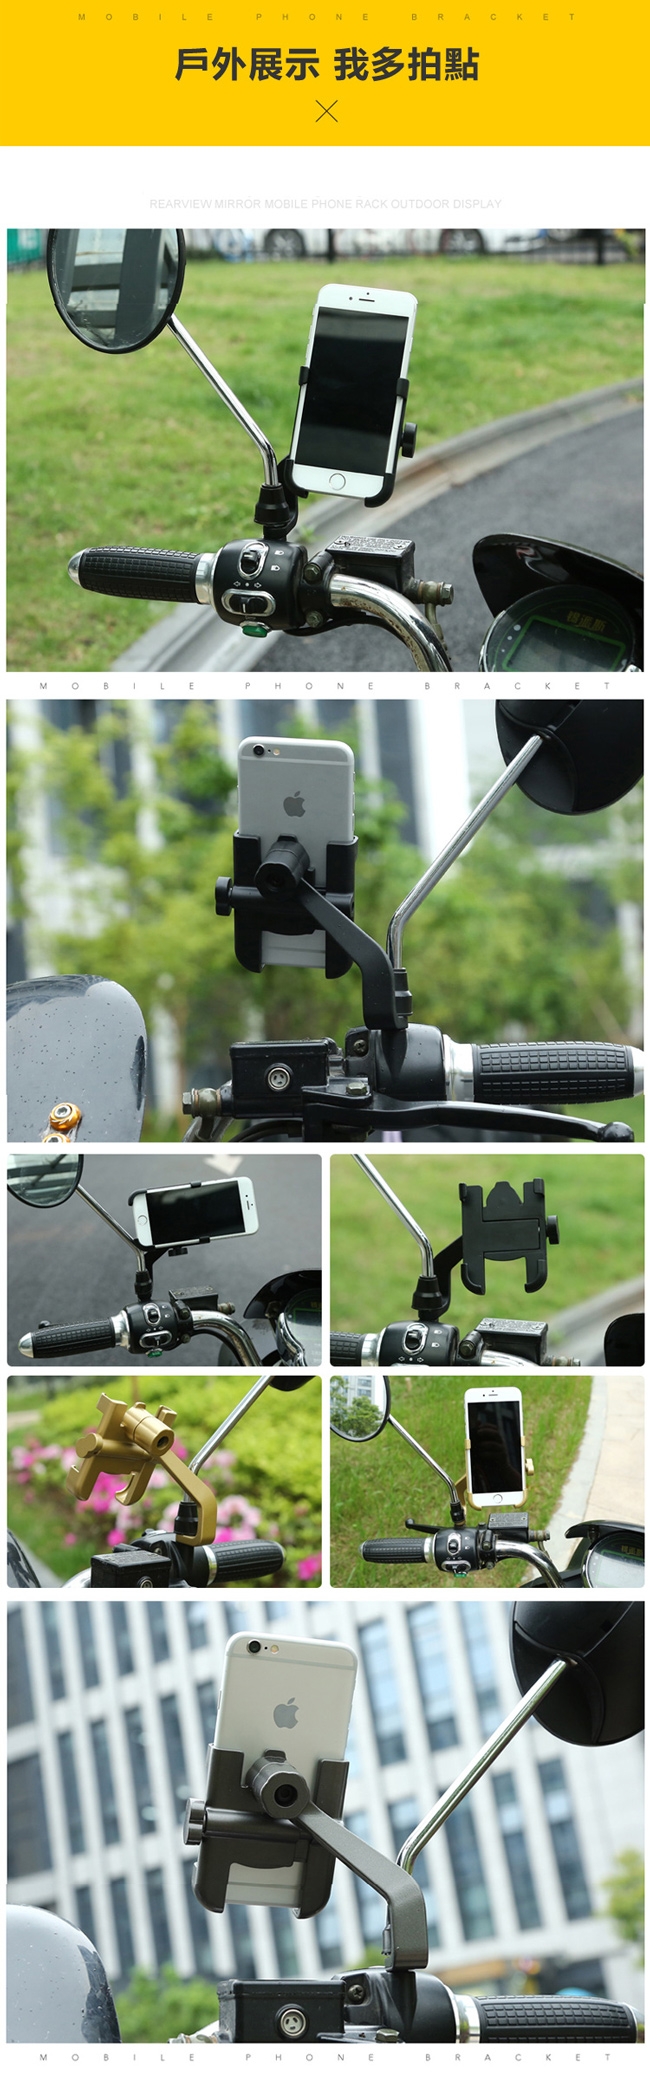 ANTIAN 鋁合金金屬後視鏡手機導航支架 360度旋轉 摩托車/機車/電動車手機架